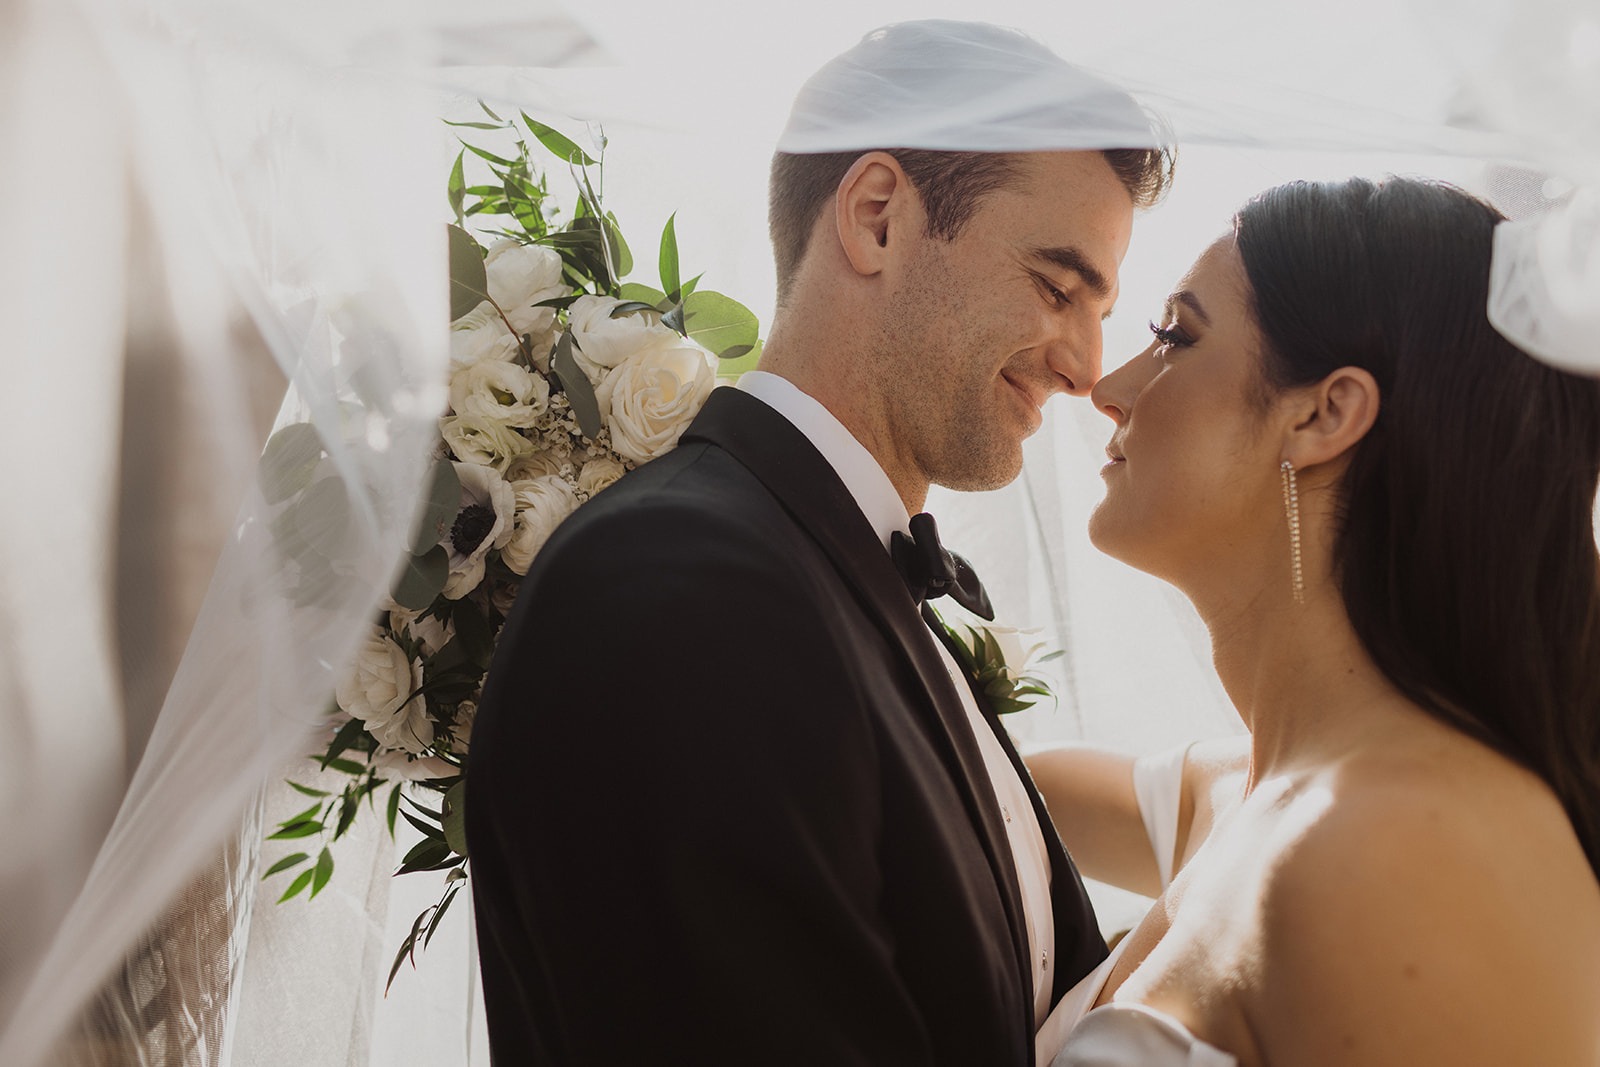 couple kisses under wedding veil with wedding bouquet